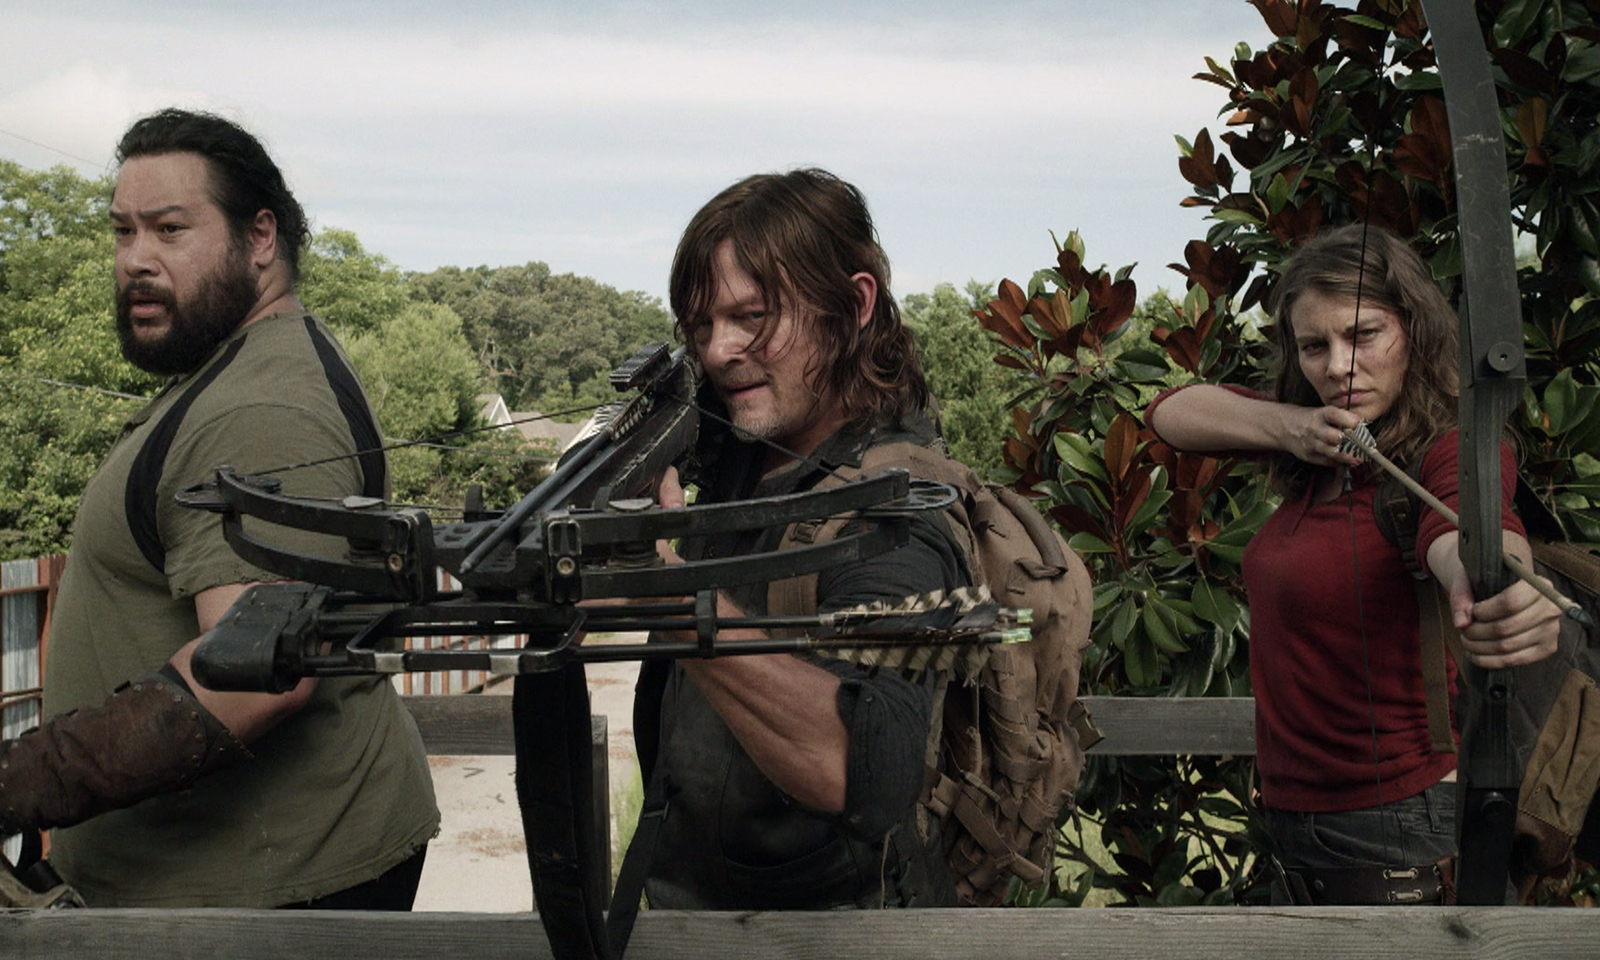 CRÍTICA | The Walking Dead S11E09 – “No Other Way”: Promessas Impossíveis